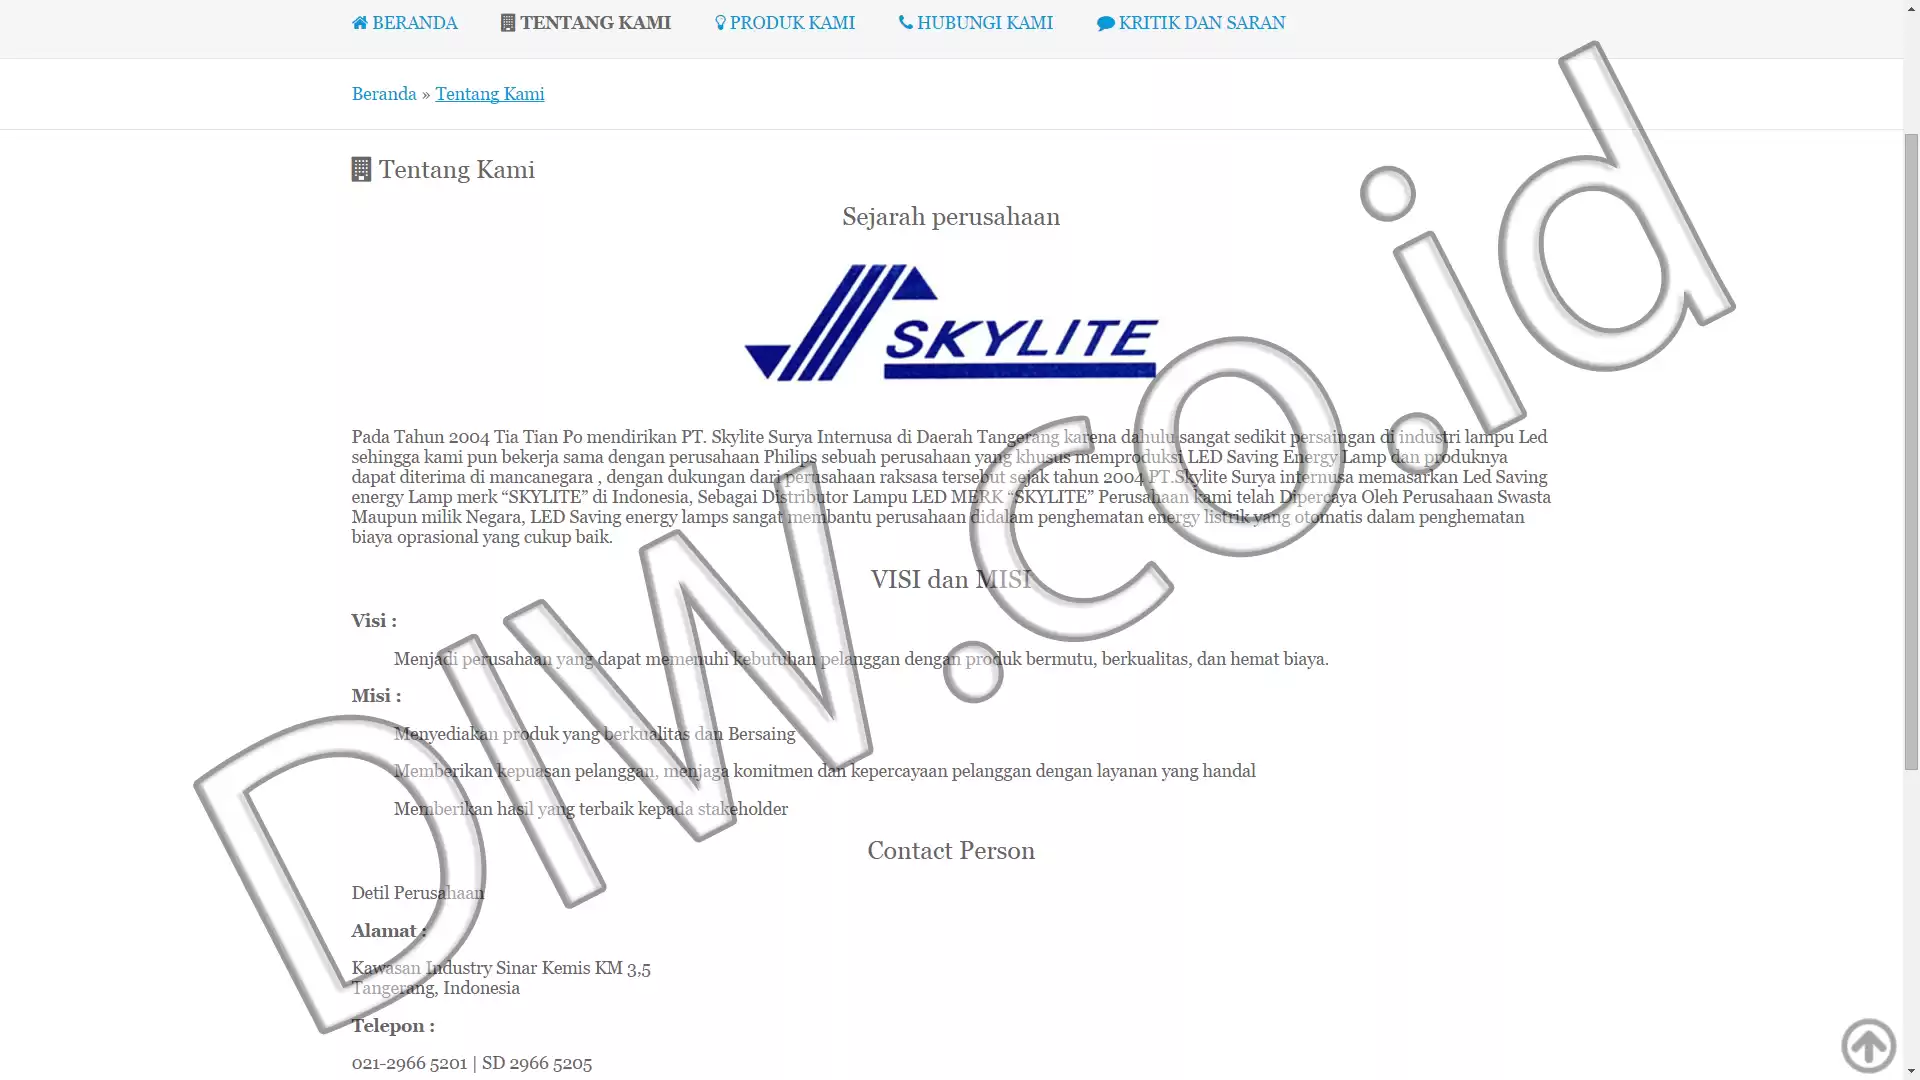 Portfolio - Skylite Surya Internusa - DIW.co.id (Digital In Website) Jasa Pembuatan Website dan Program Skripsi